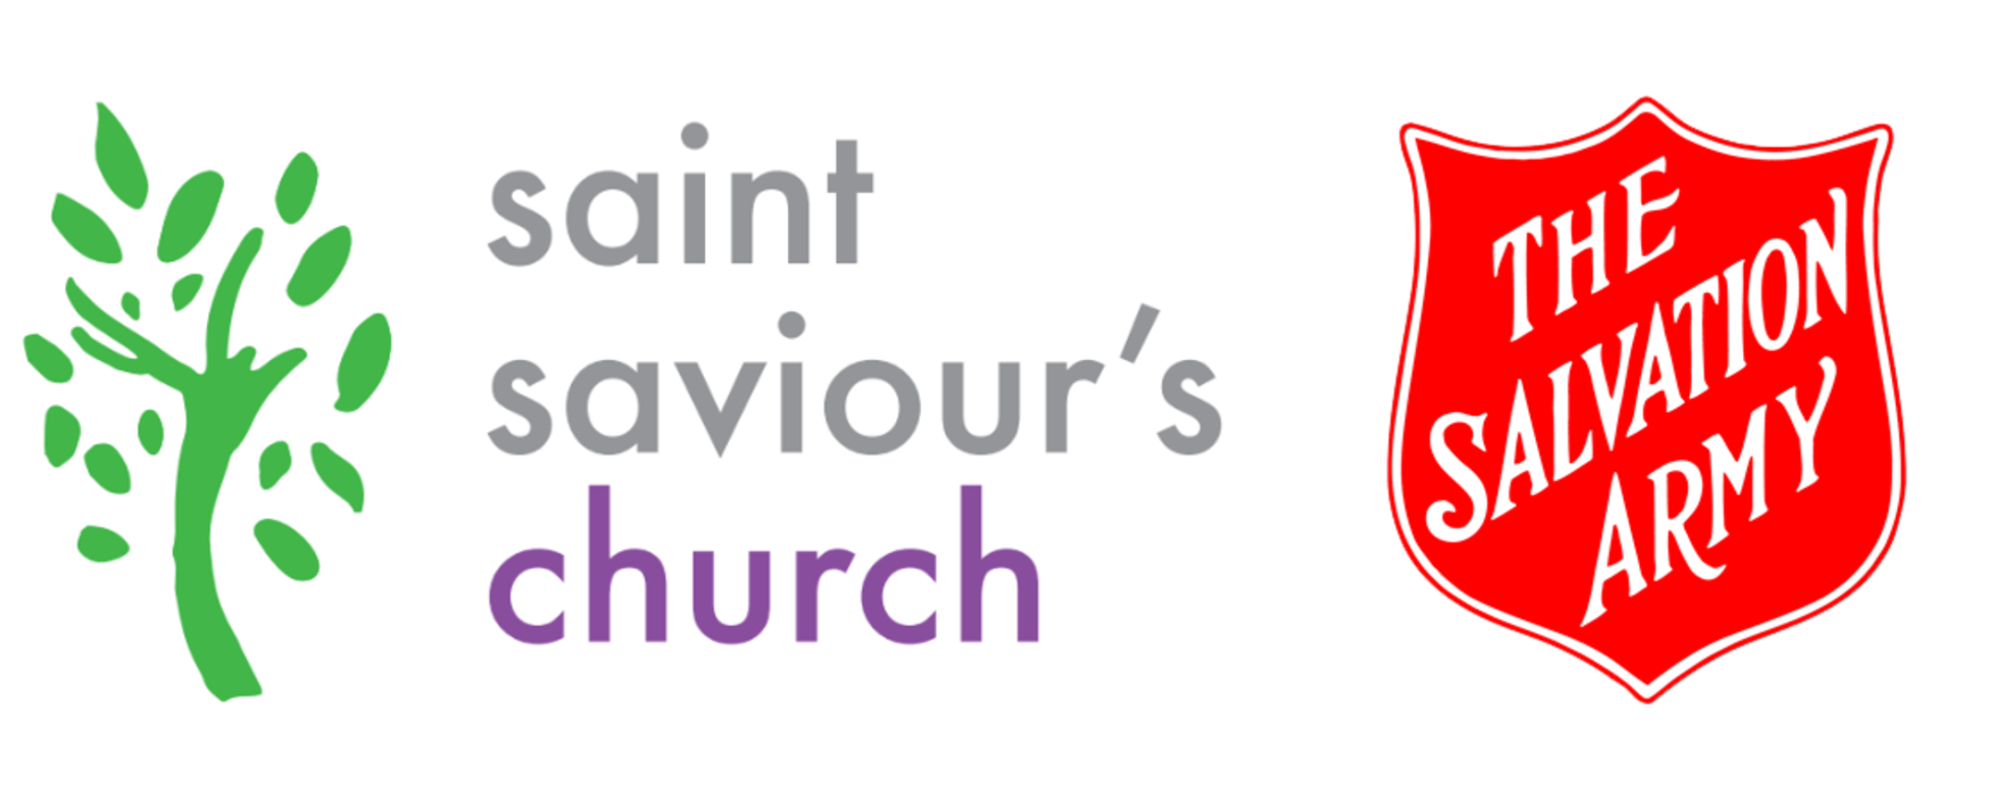 Saint Saviour's church & The Salvation Army logo